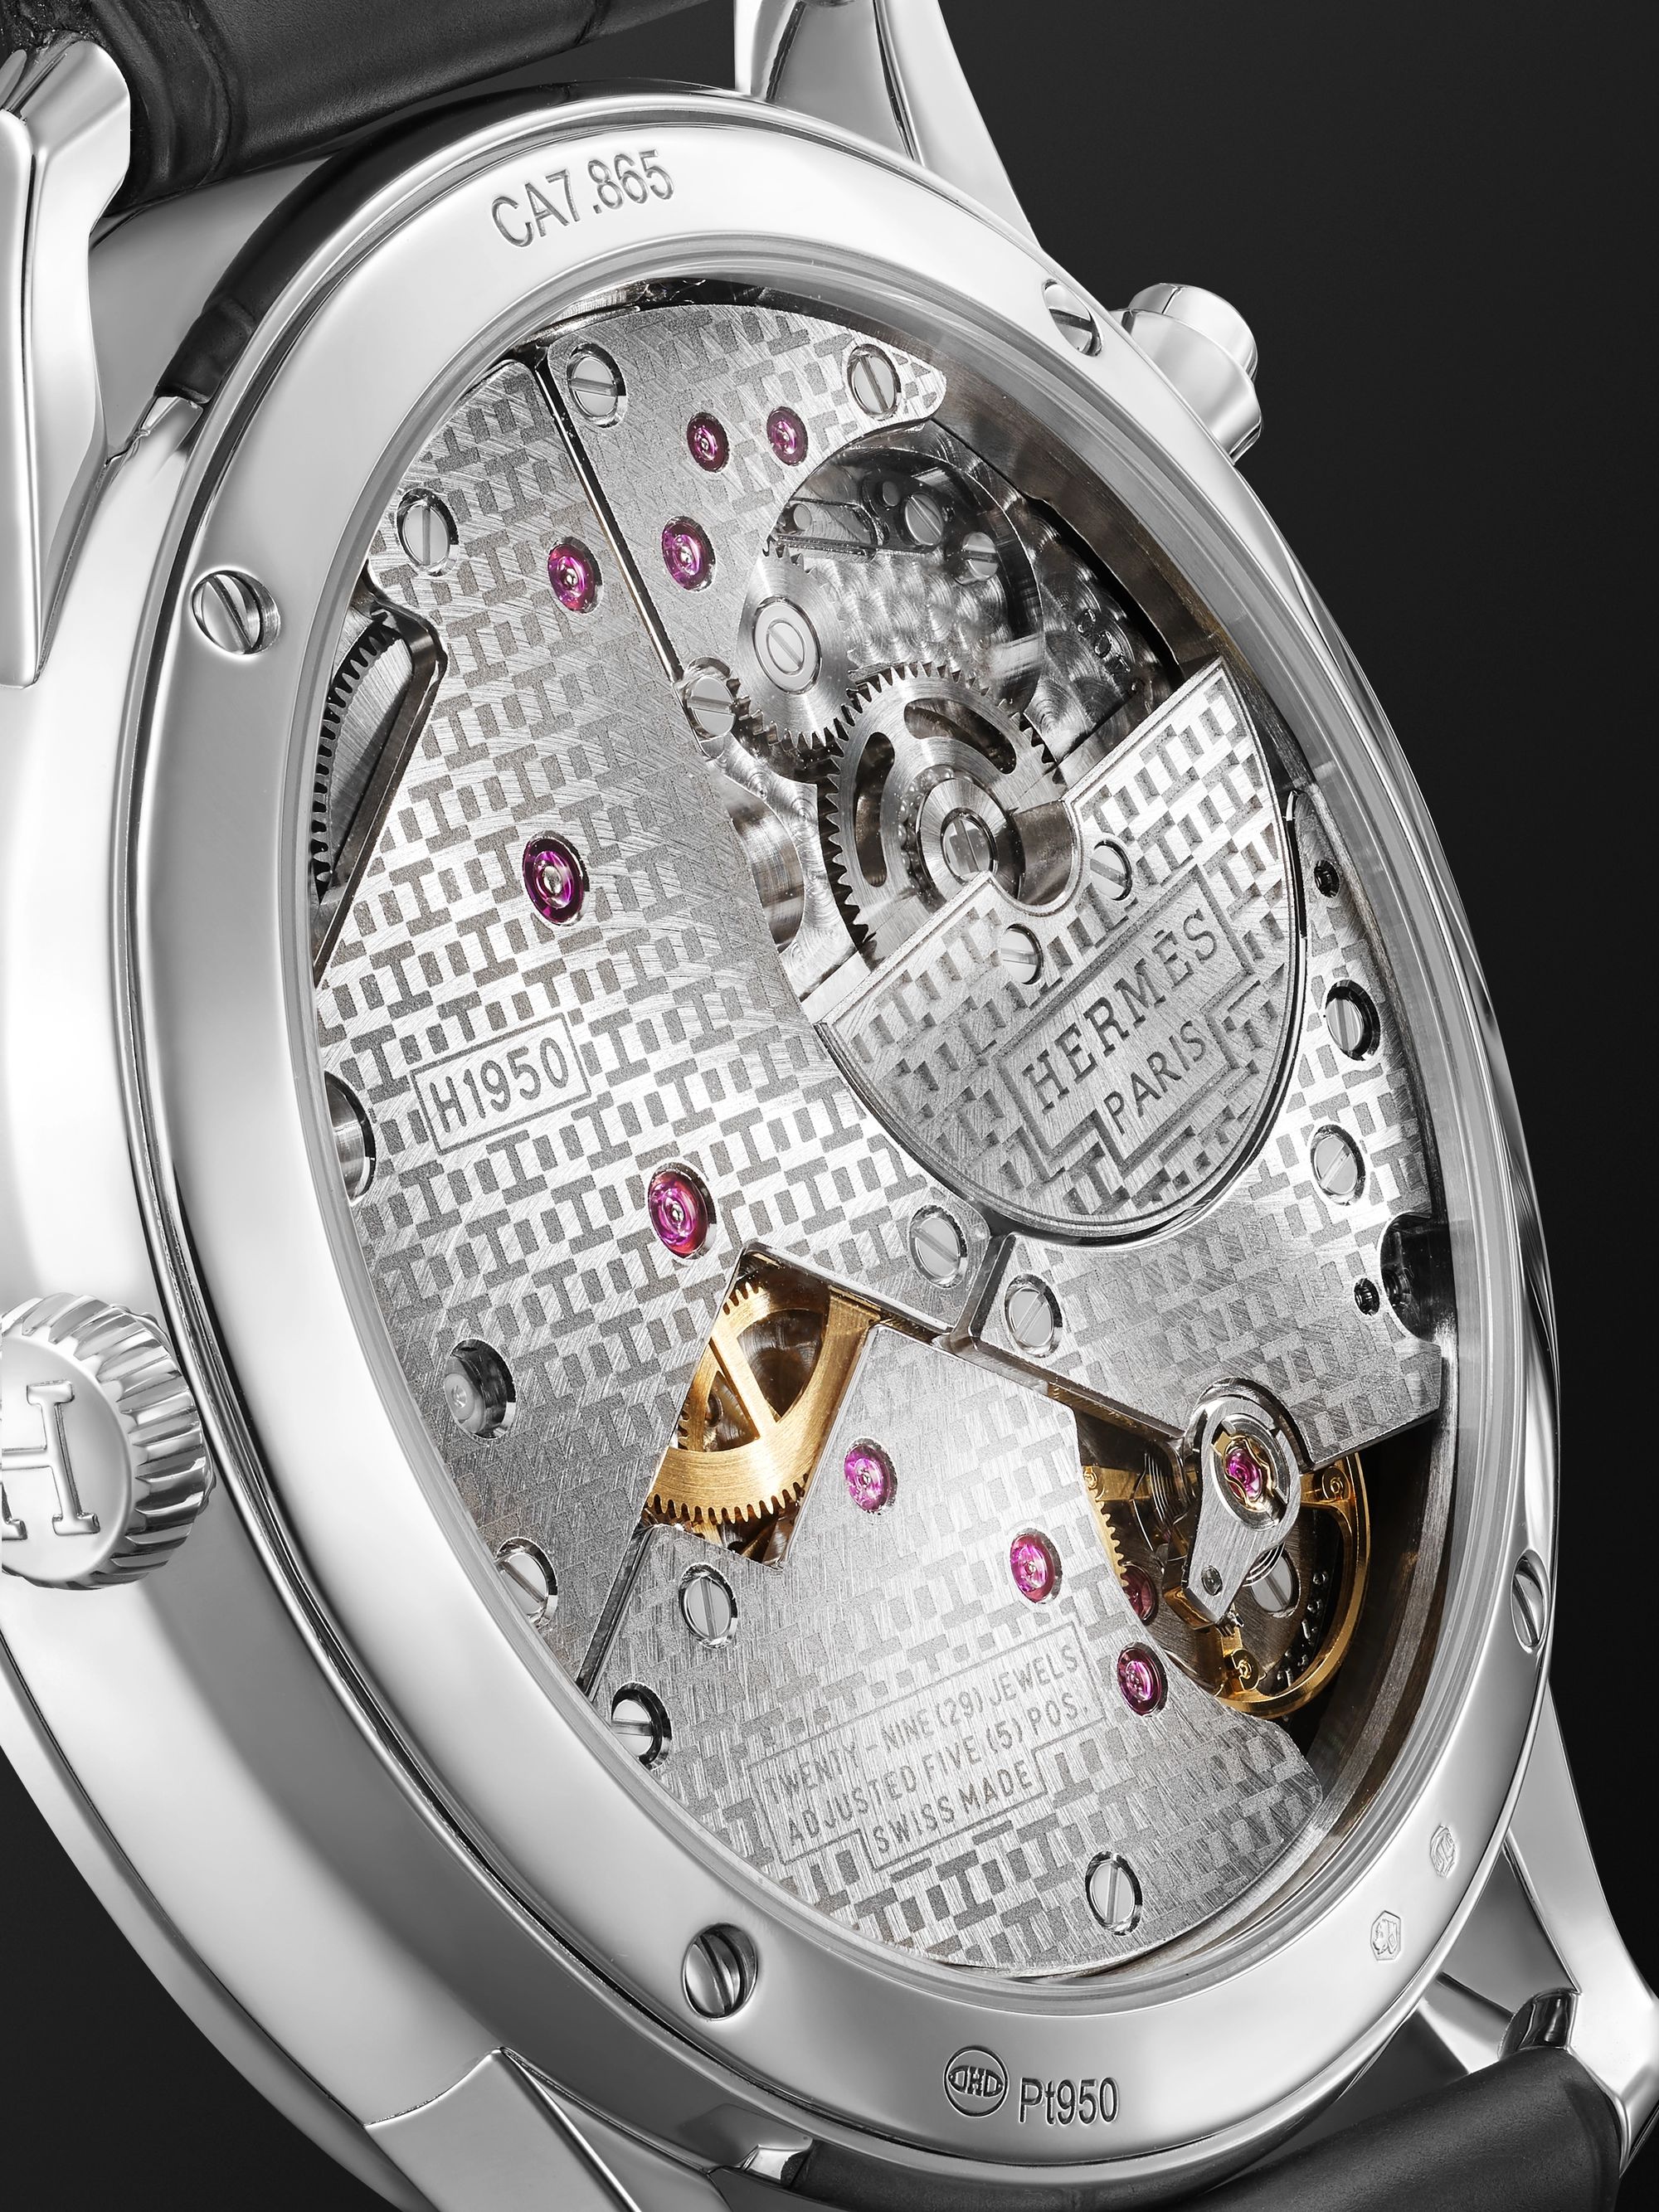 HERMÈS TIMEPIECES Slim d'Hermès Automatic GMT 39mm Platinum and Alligator Watch, Ref. No. 054192WW00